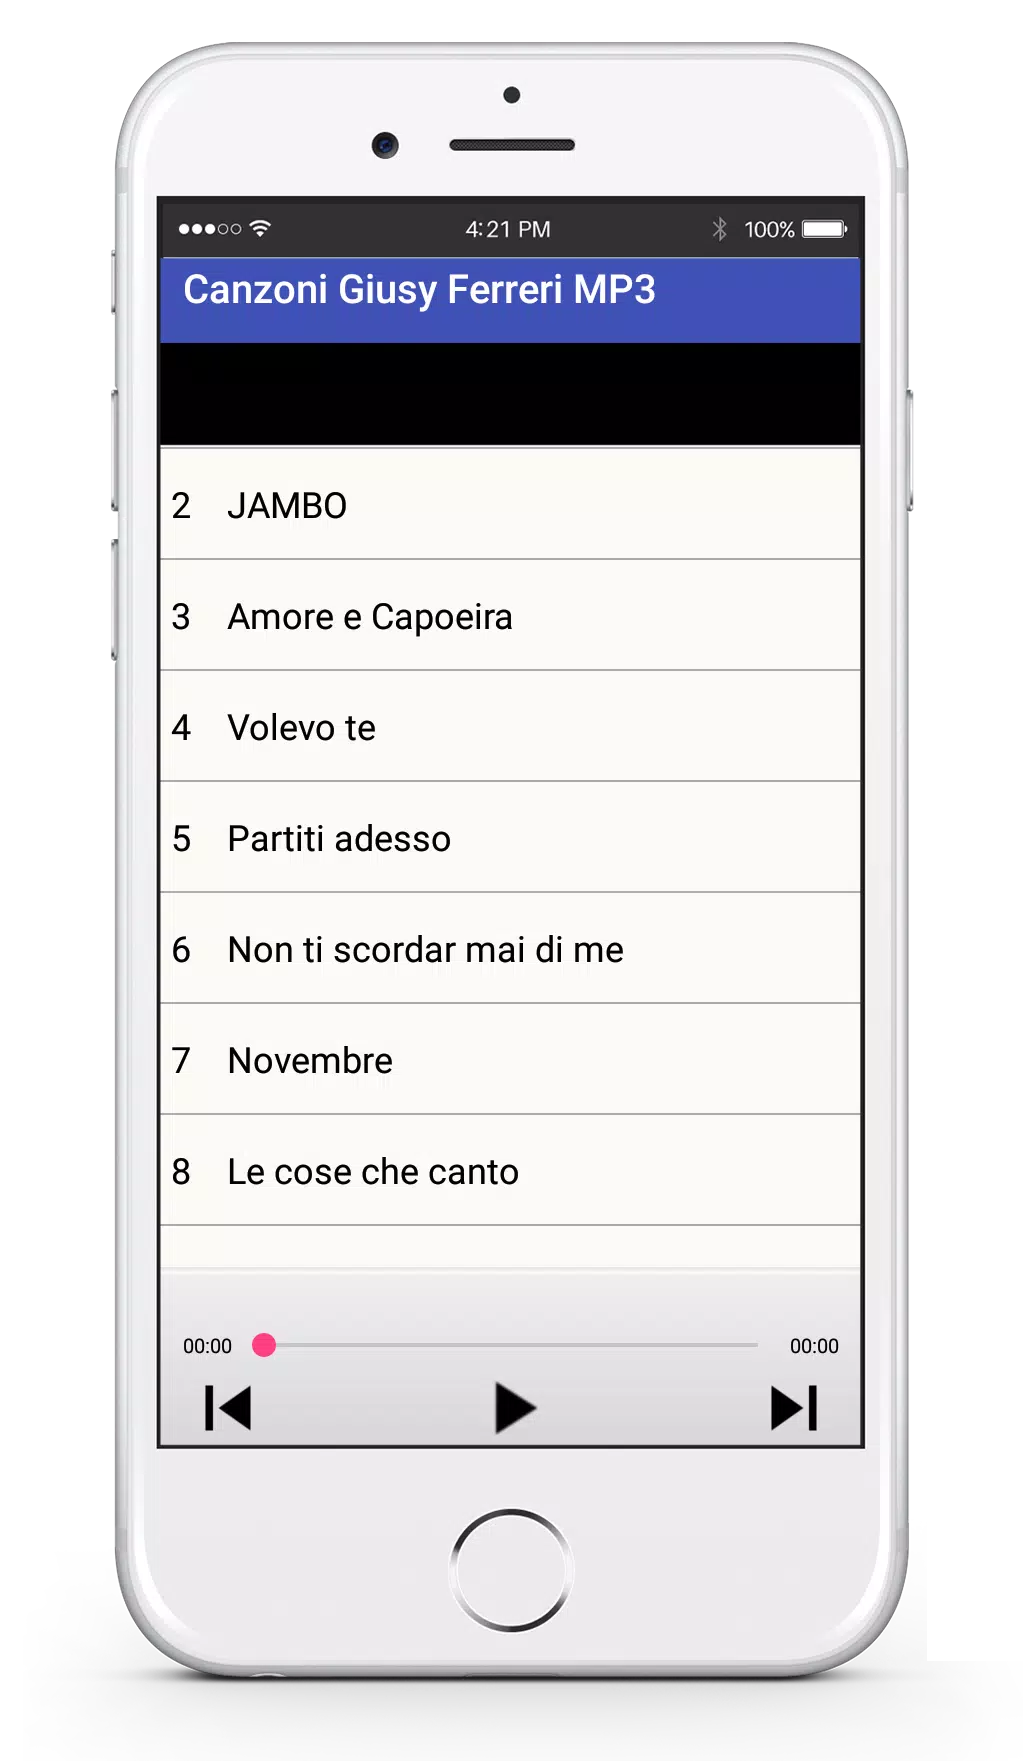 Giusy Ferreri Canzoni MP3 APK for Android Download